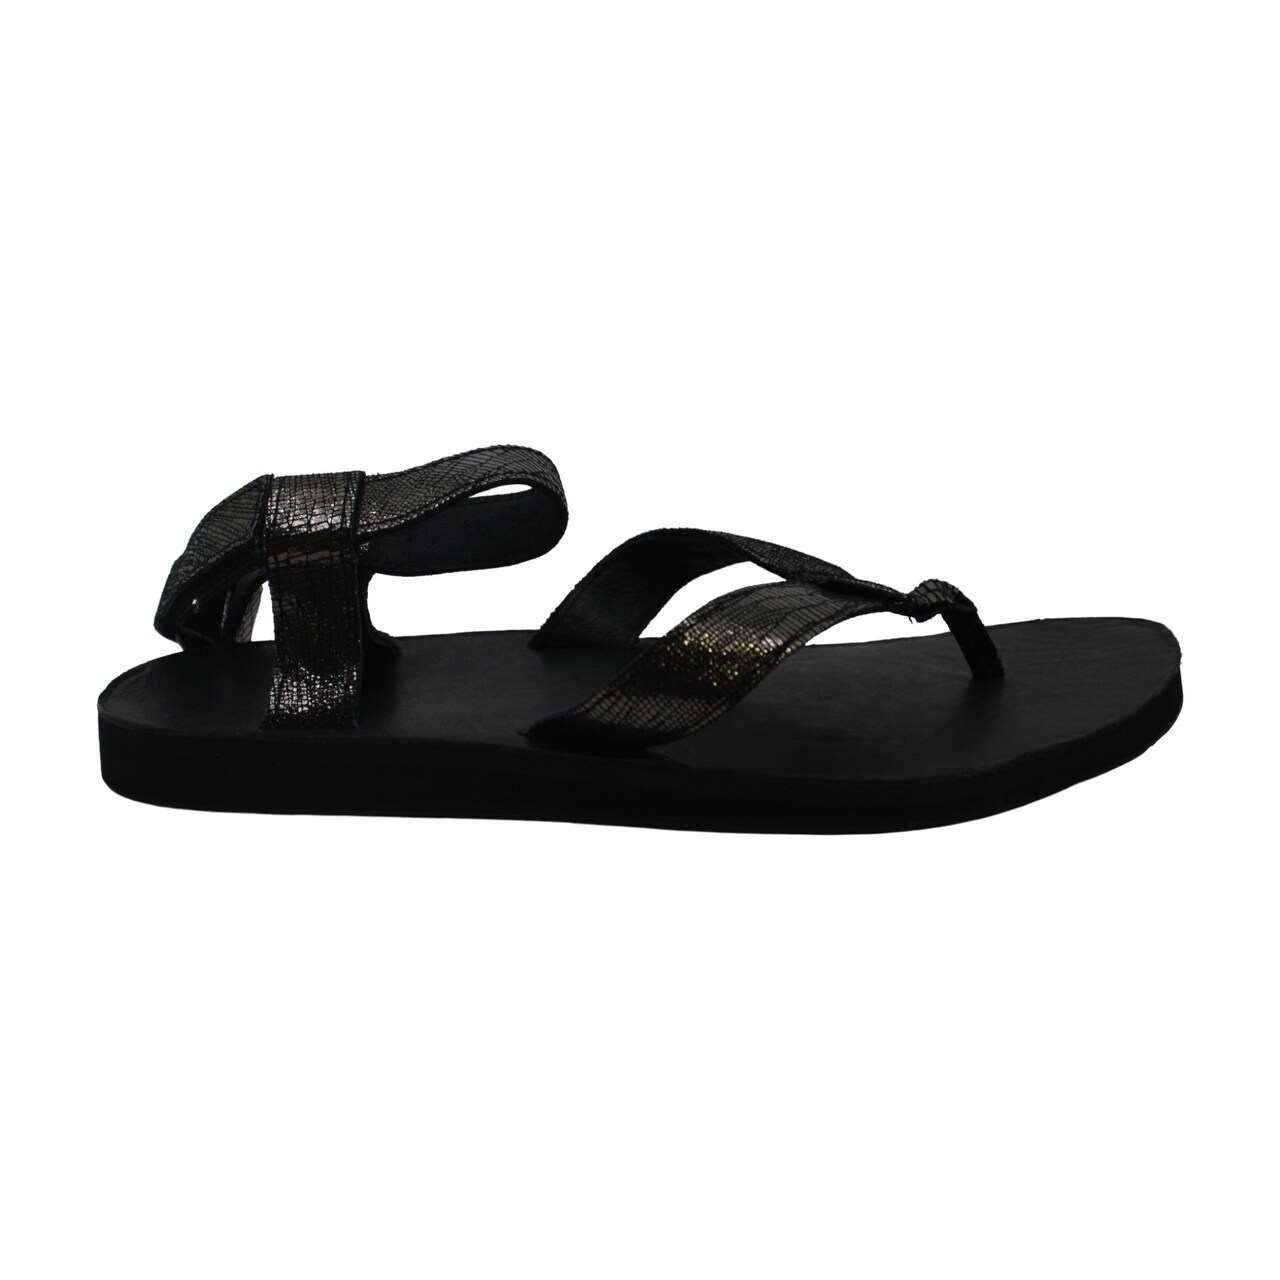 black sport sandals womens